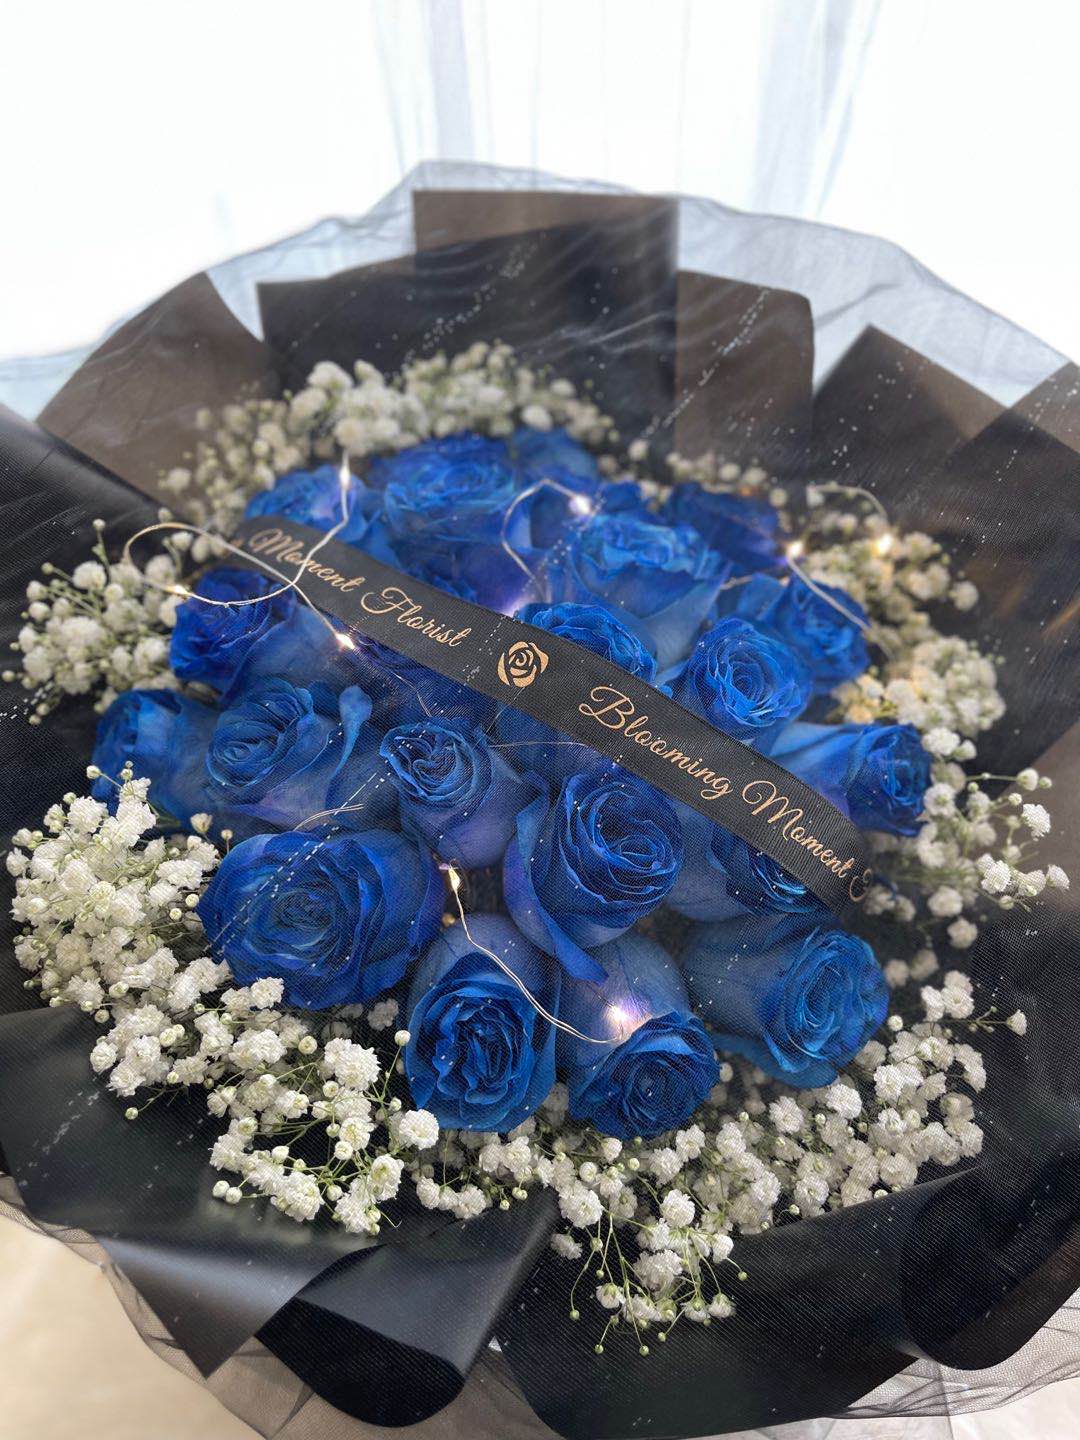 [FRESH FLOWER] Royal blue tinted rose bouquet